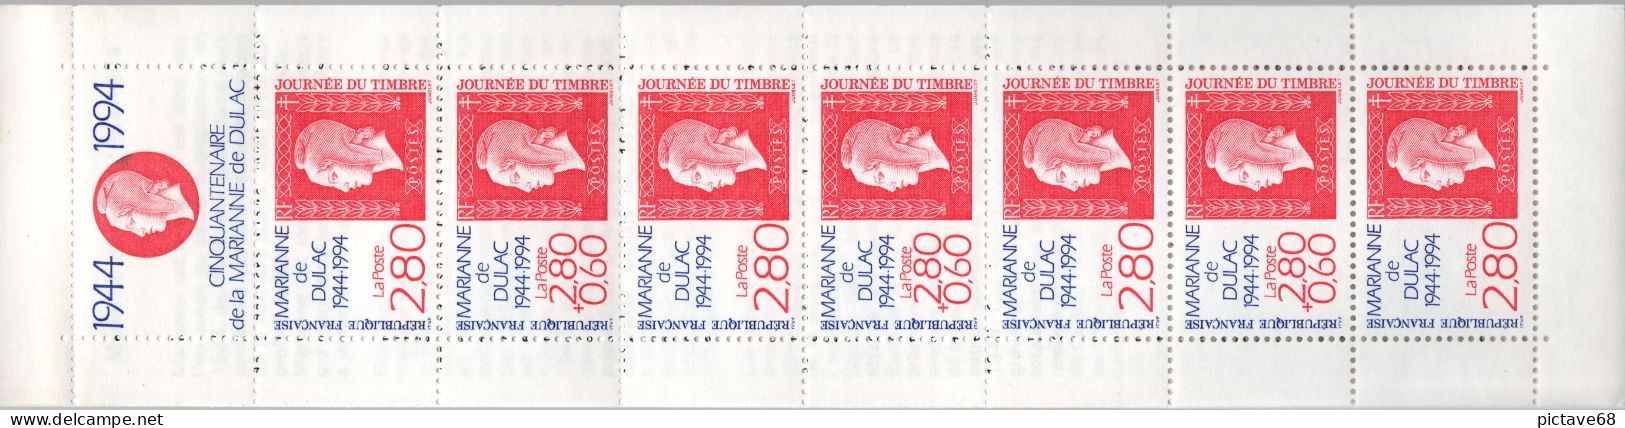 FRANCE / CARNETS JOURNEE & FETE DU TIMBRE / N° BC 2865  ( 1994 ) - Stamp Day